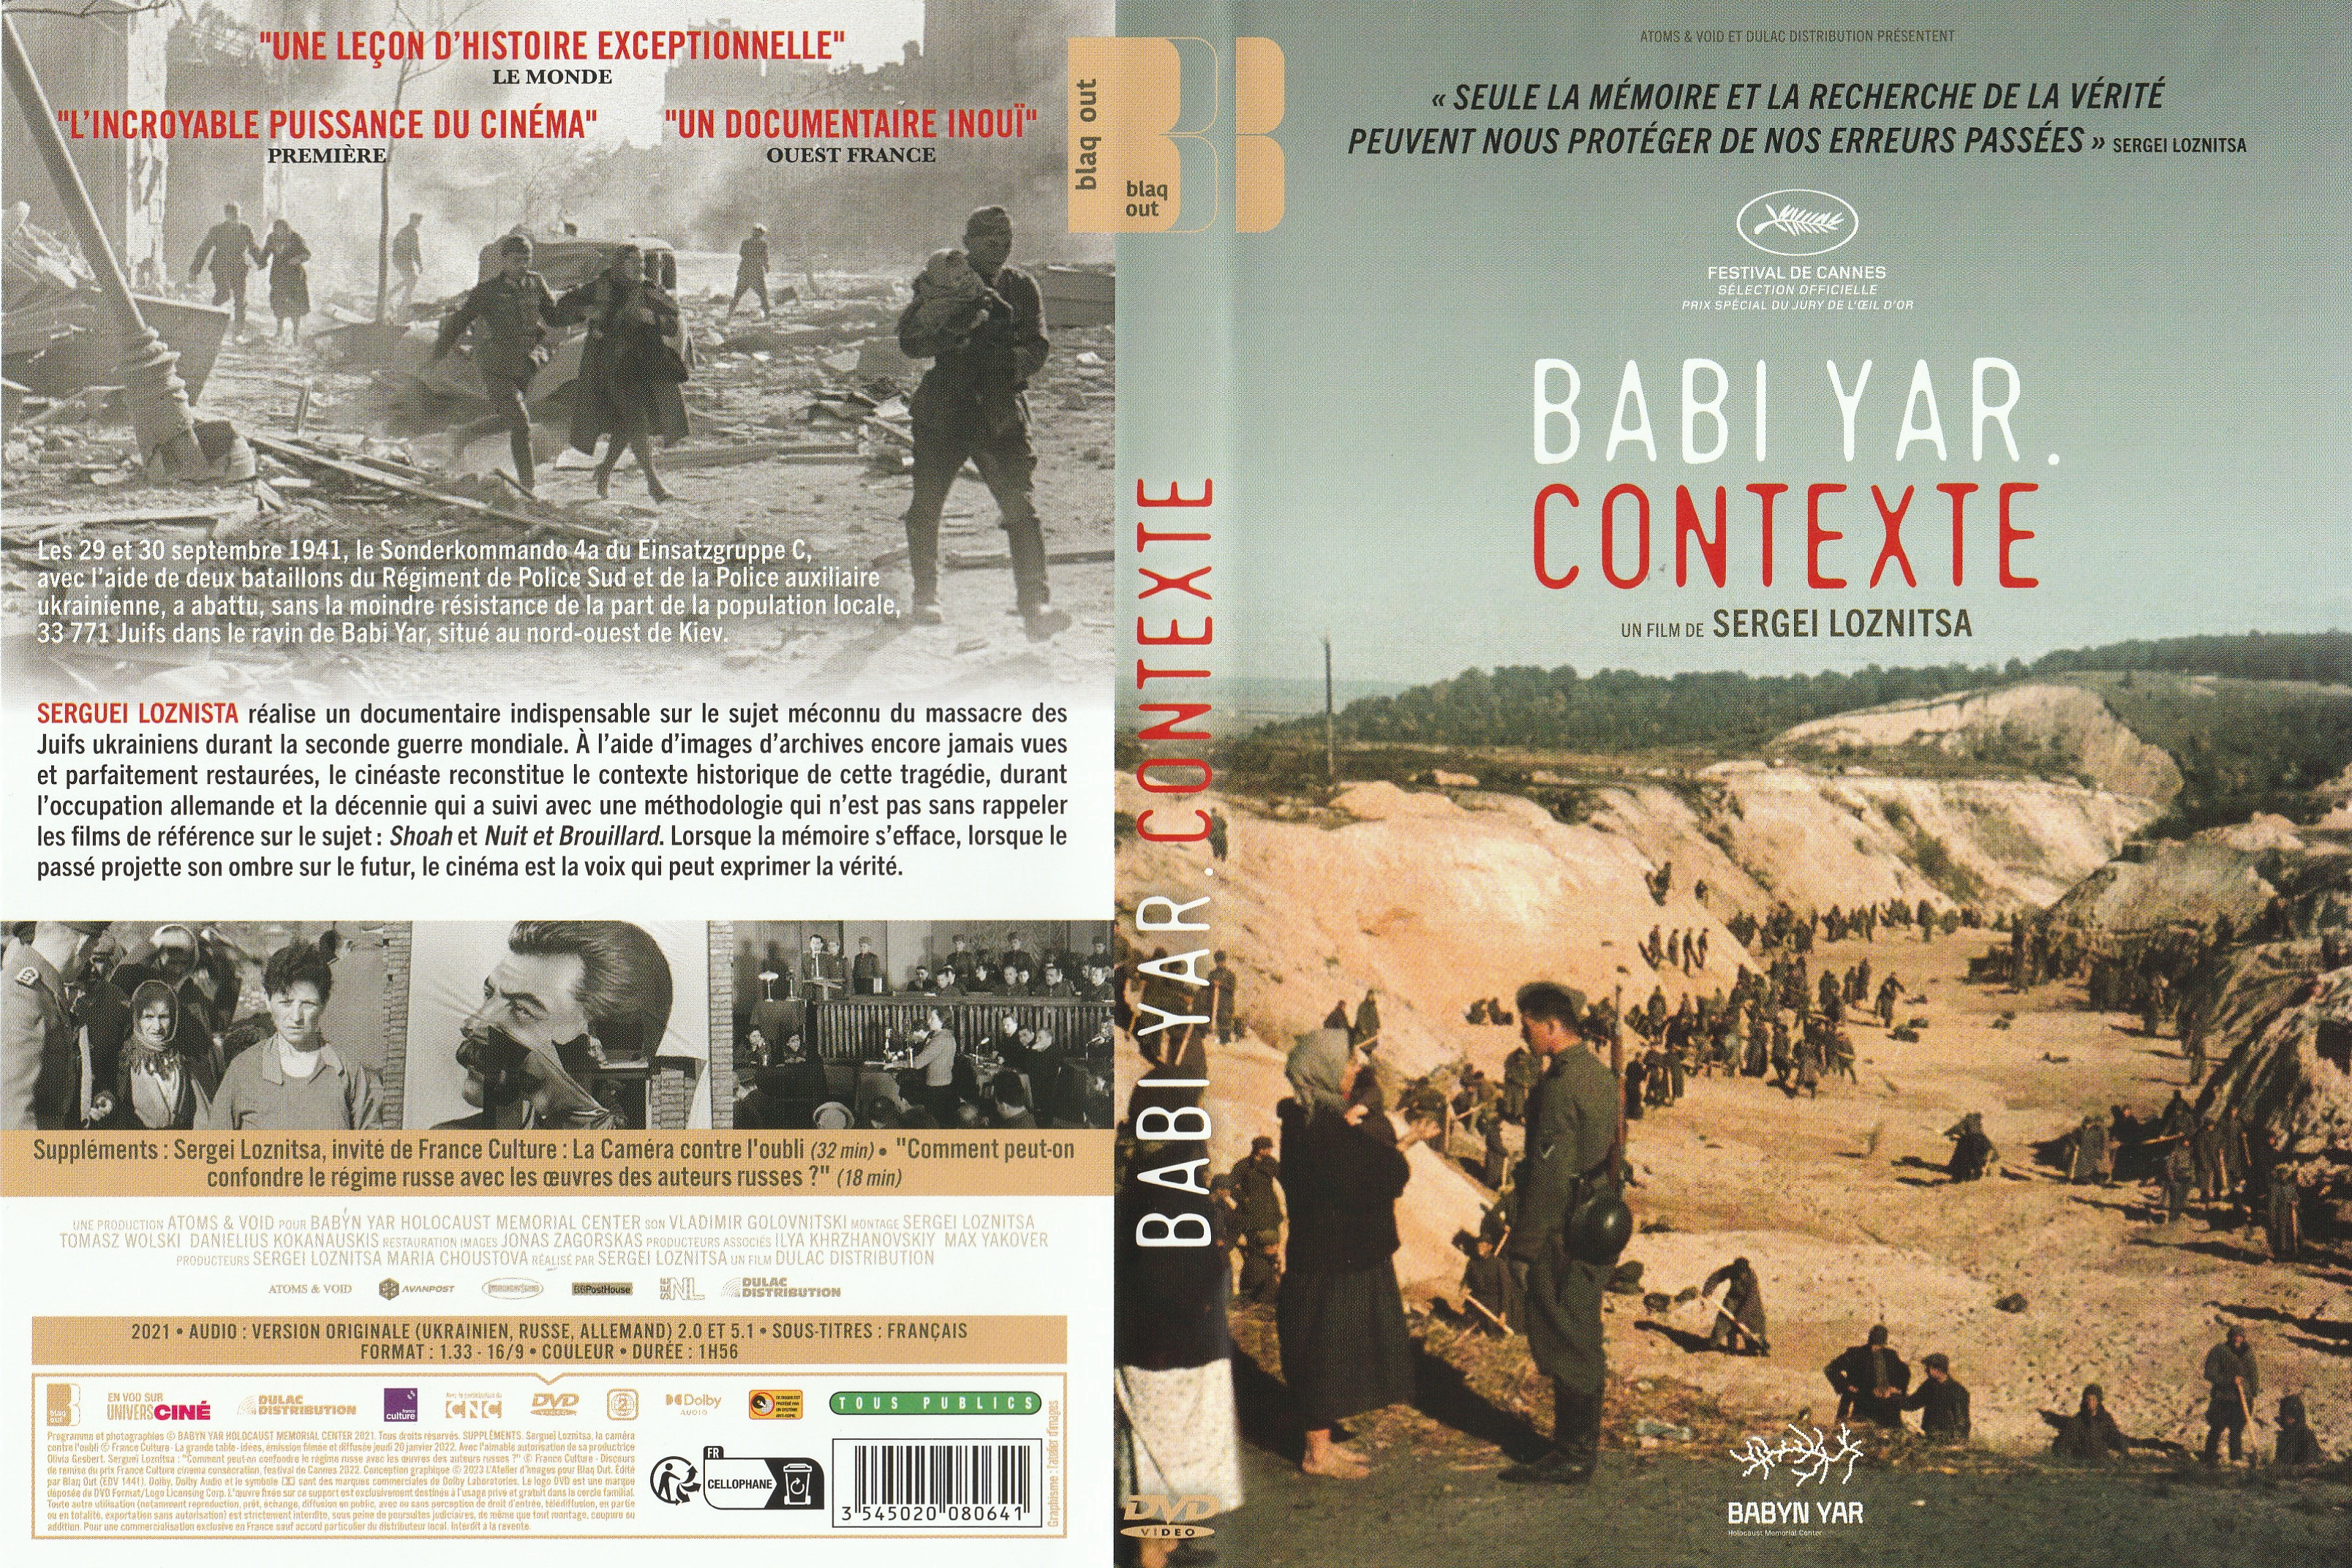 Jaquette DVD Babi Yar Contexte